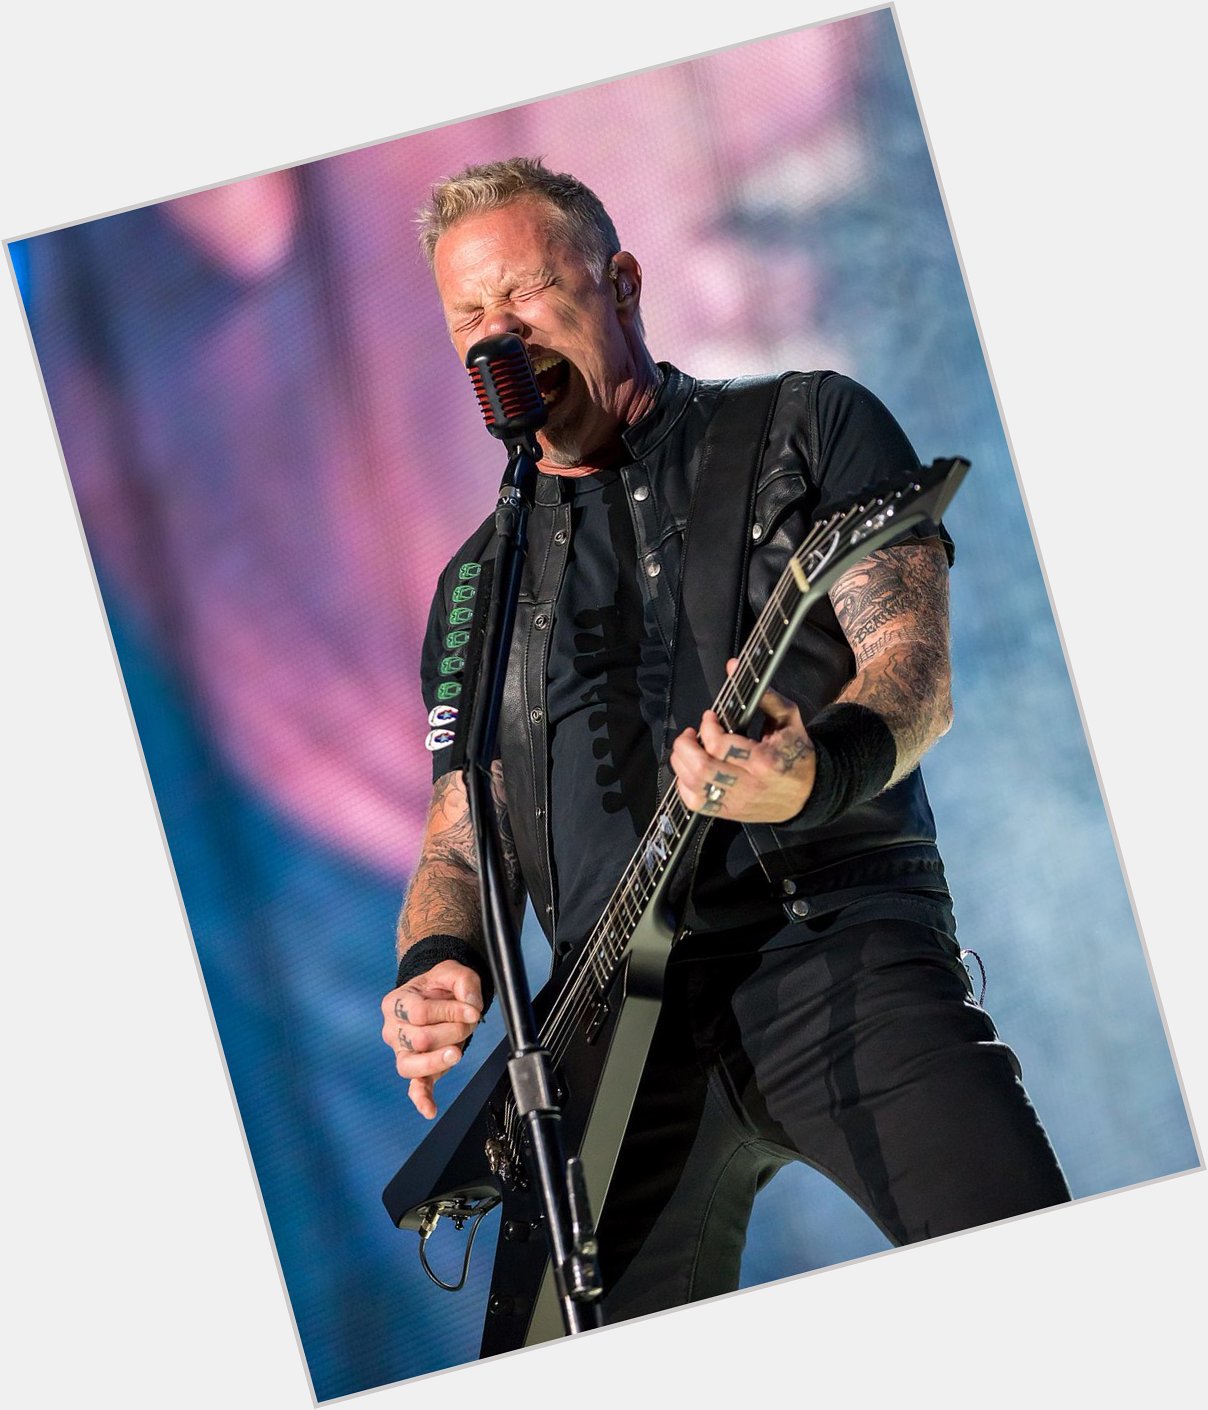 Happy birthday James Hetfield 59 years old.
Metallica 